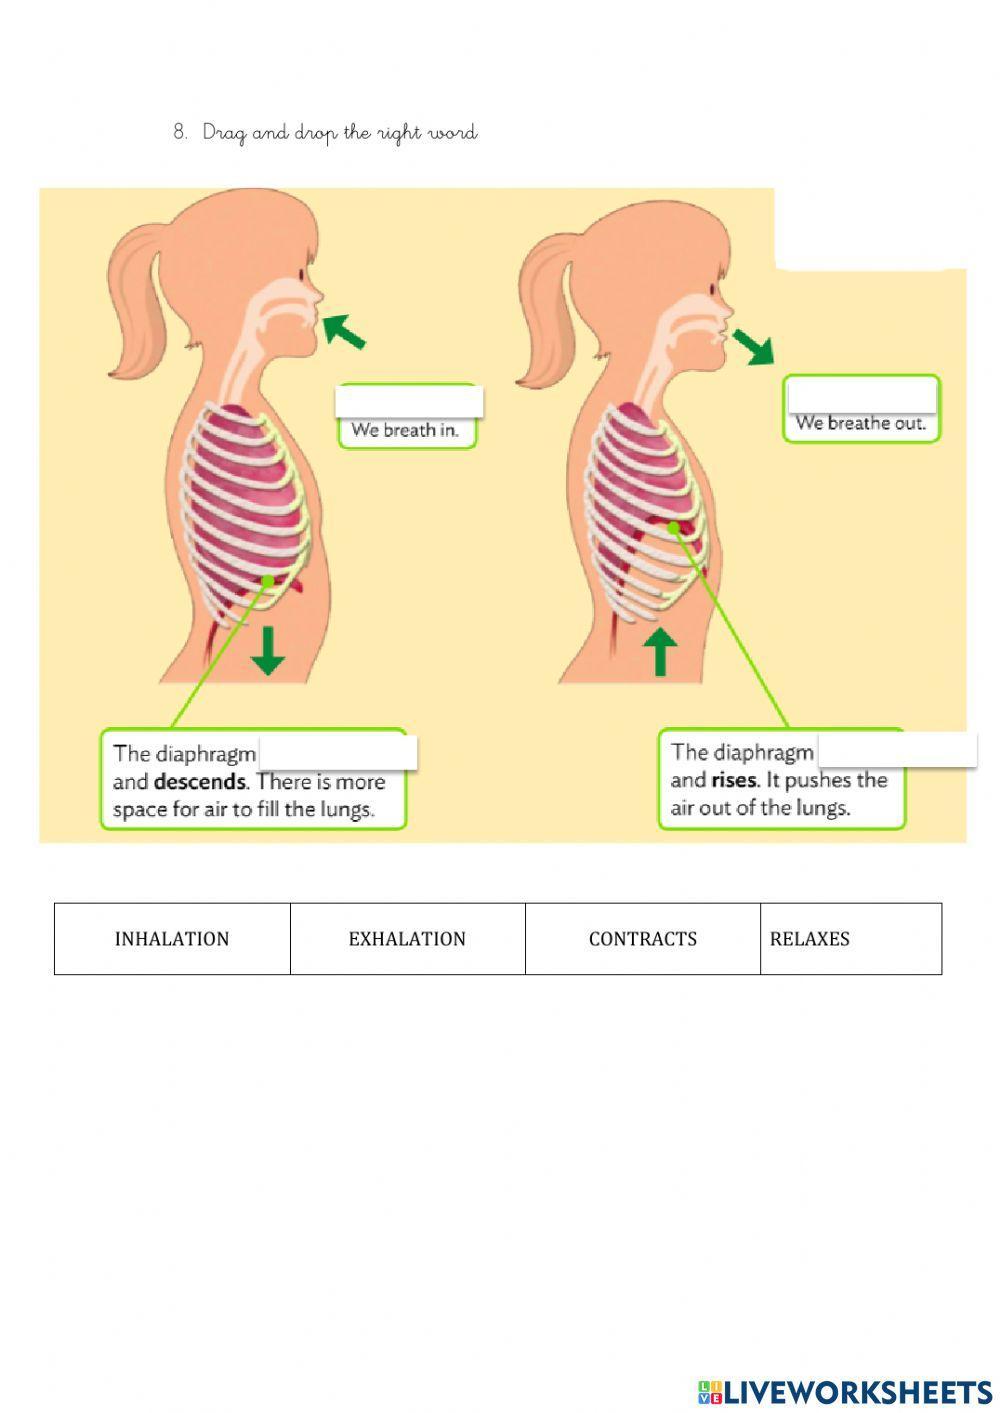 Respiratory system and circulatory system